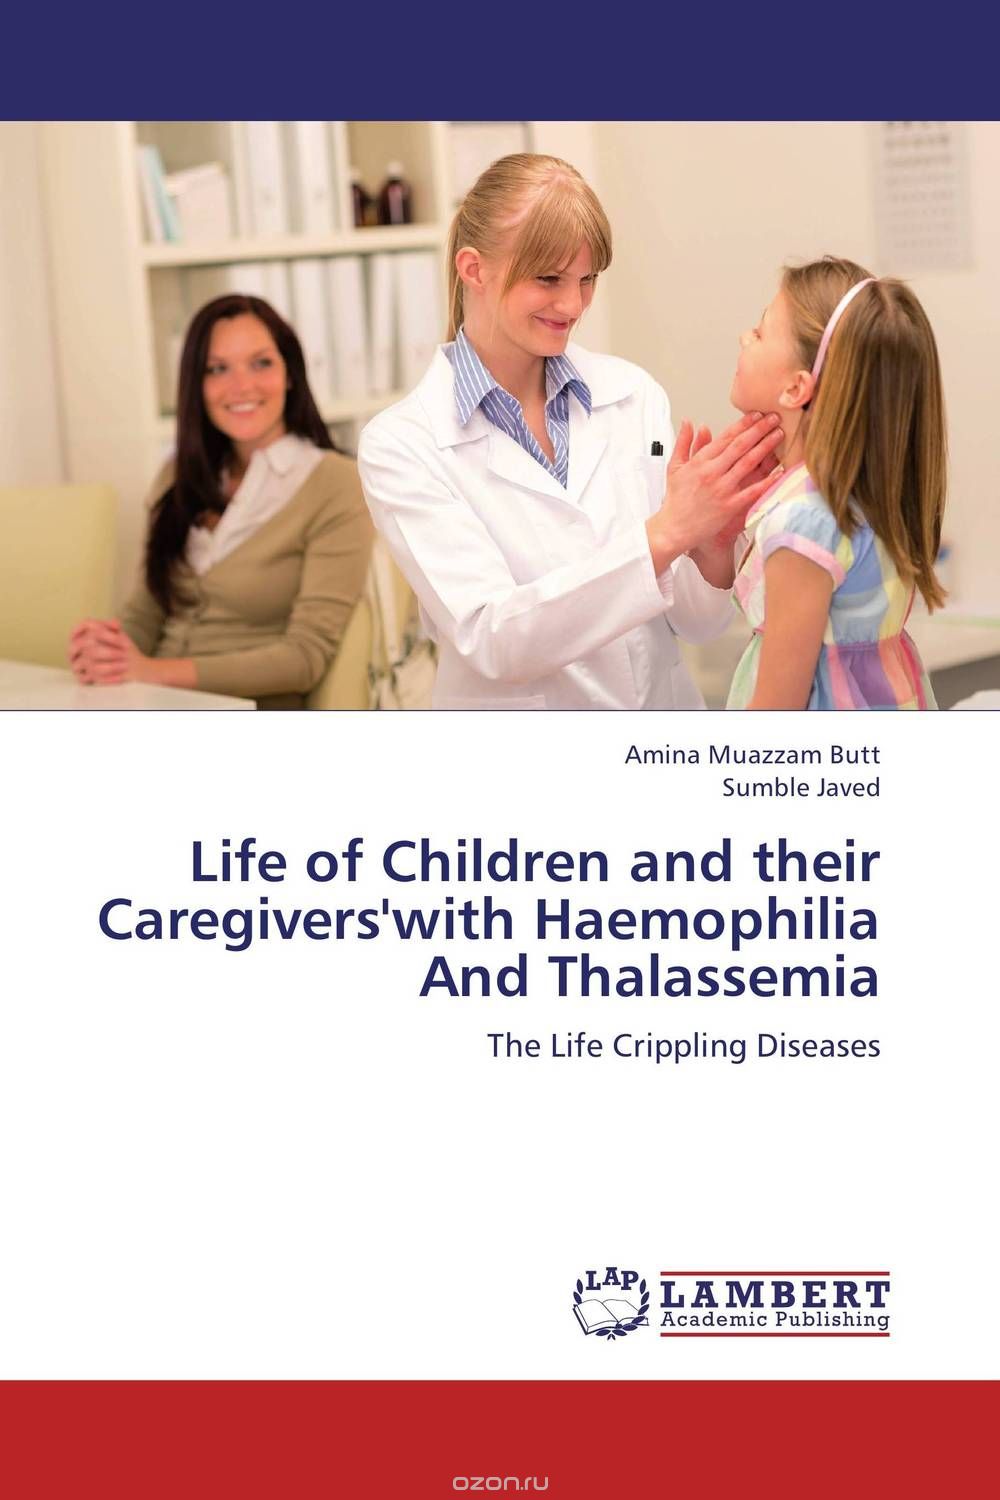 Скачать книгу "Life of Children and their Caregivers'with Haemophilia And Thalassemia"